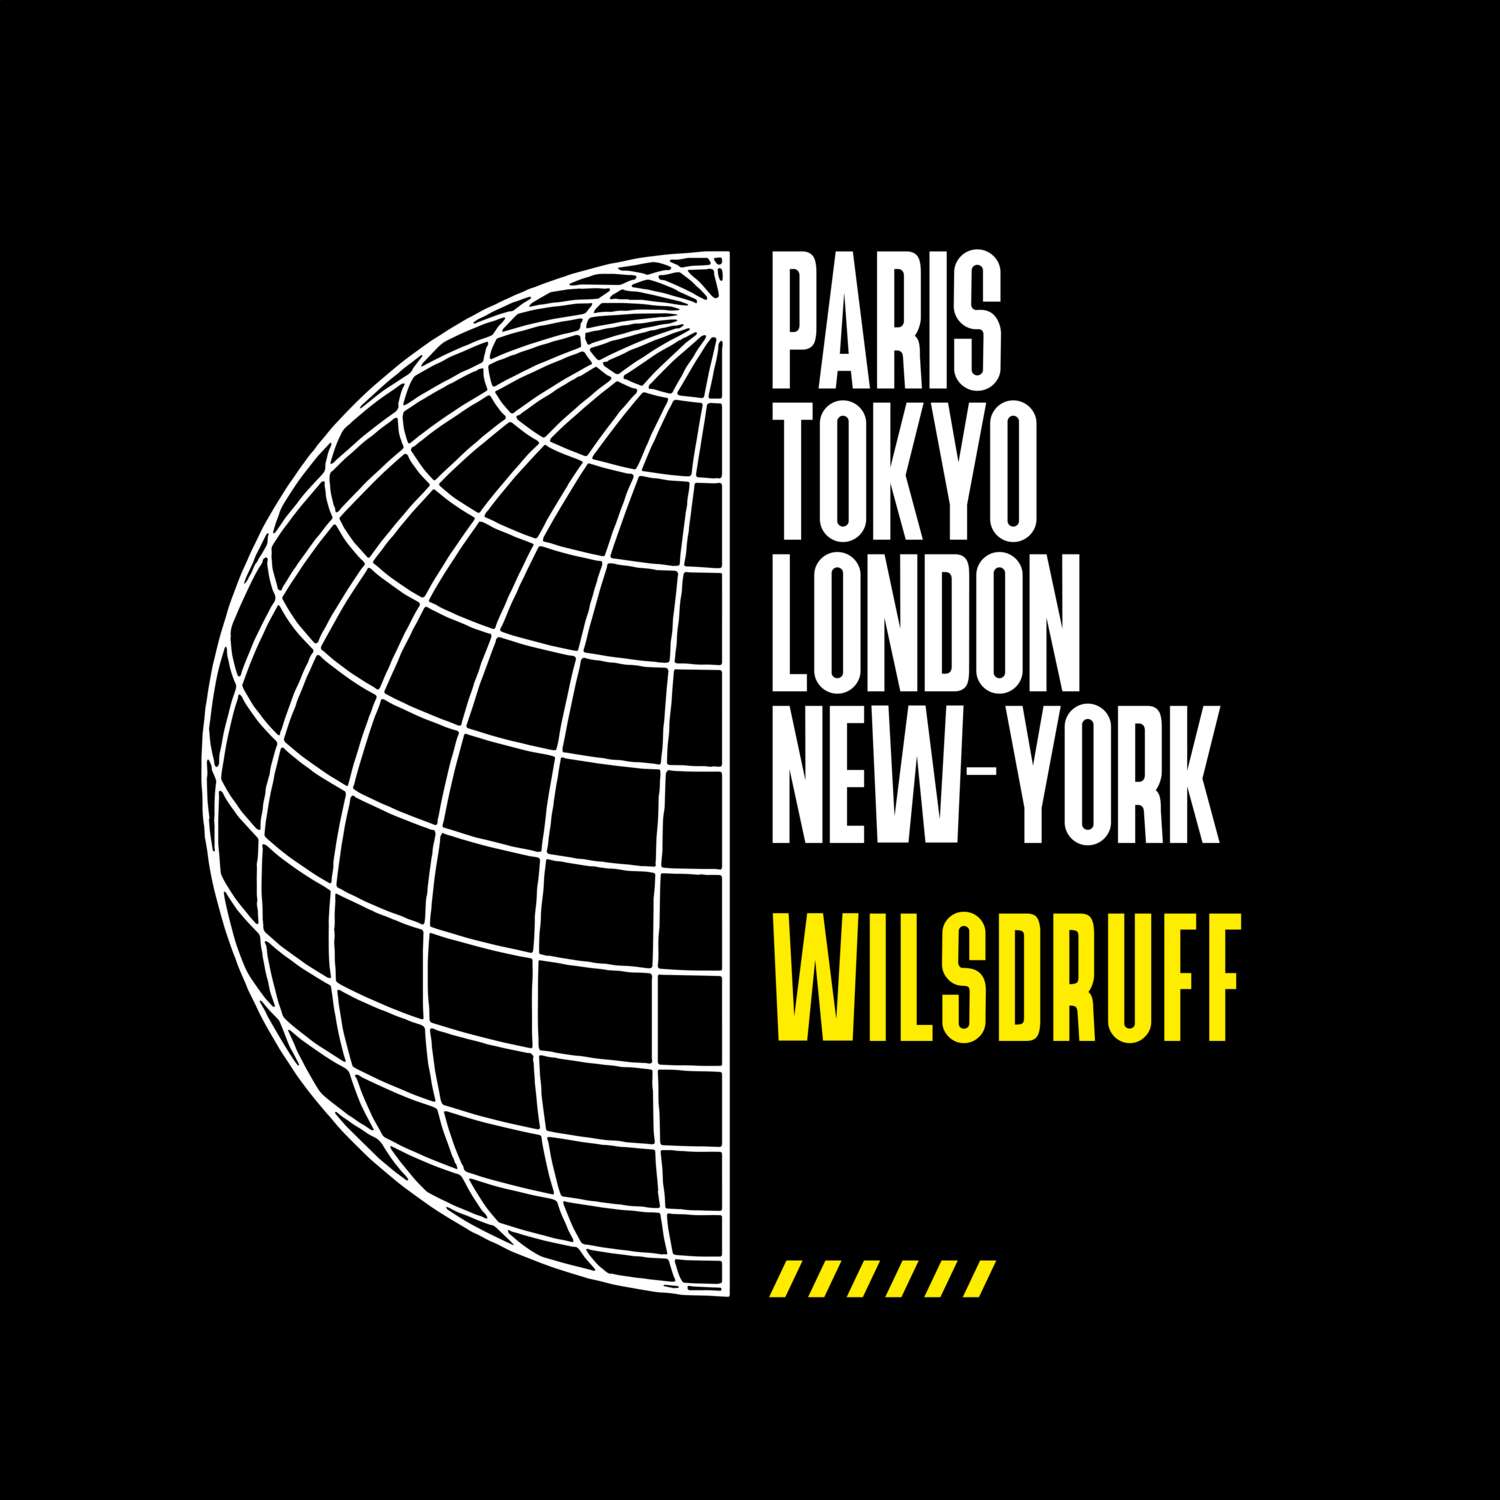 Wilsdruff T-Shirt »Paris Tokyo London«